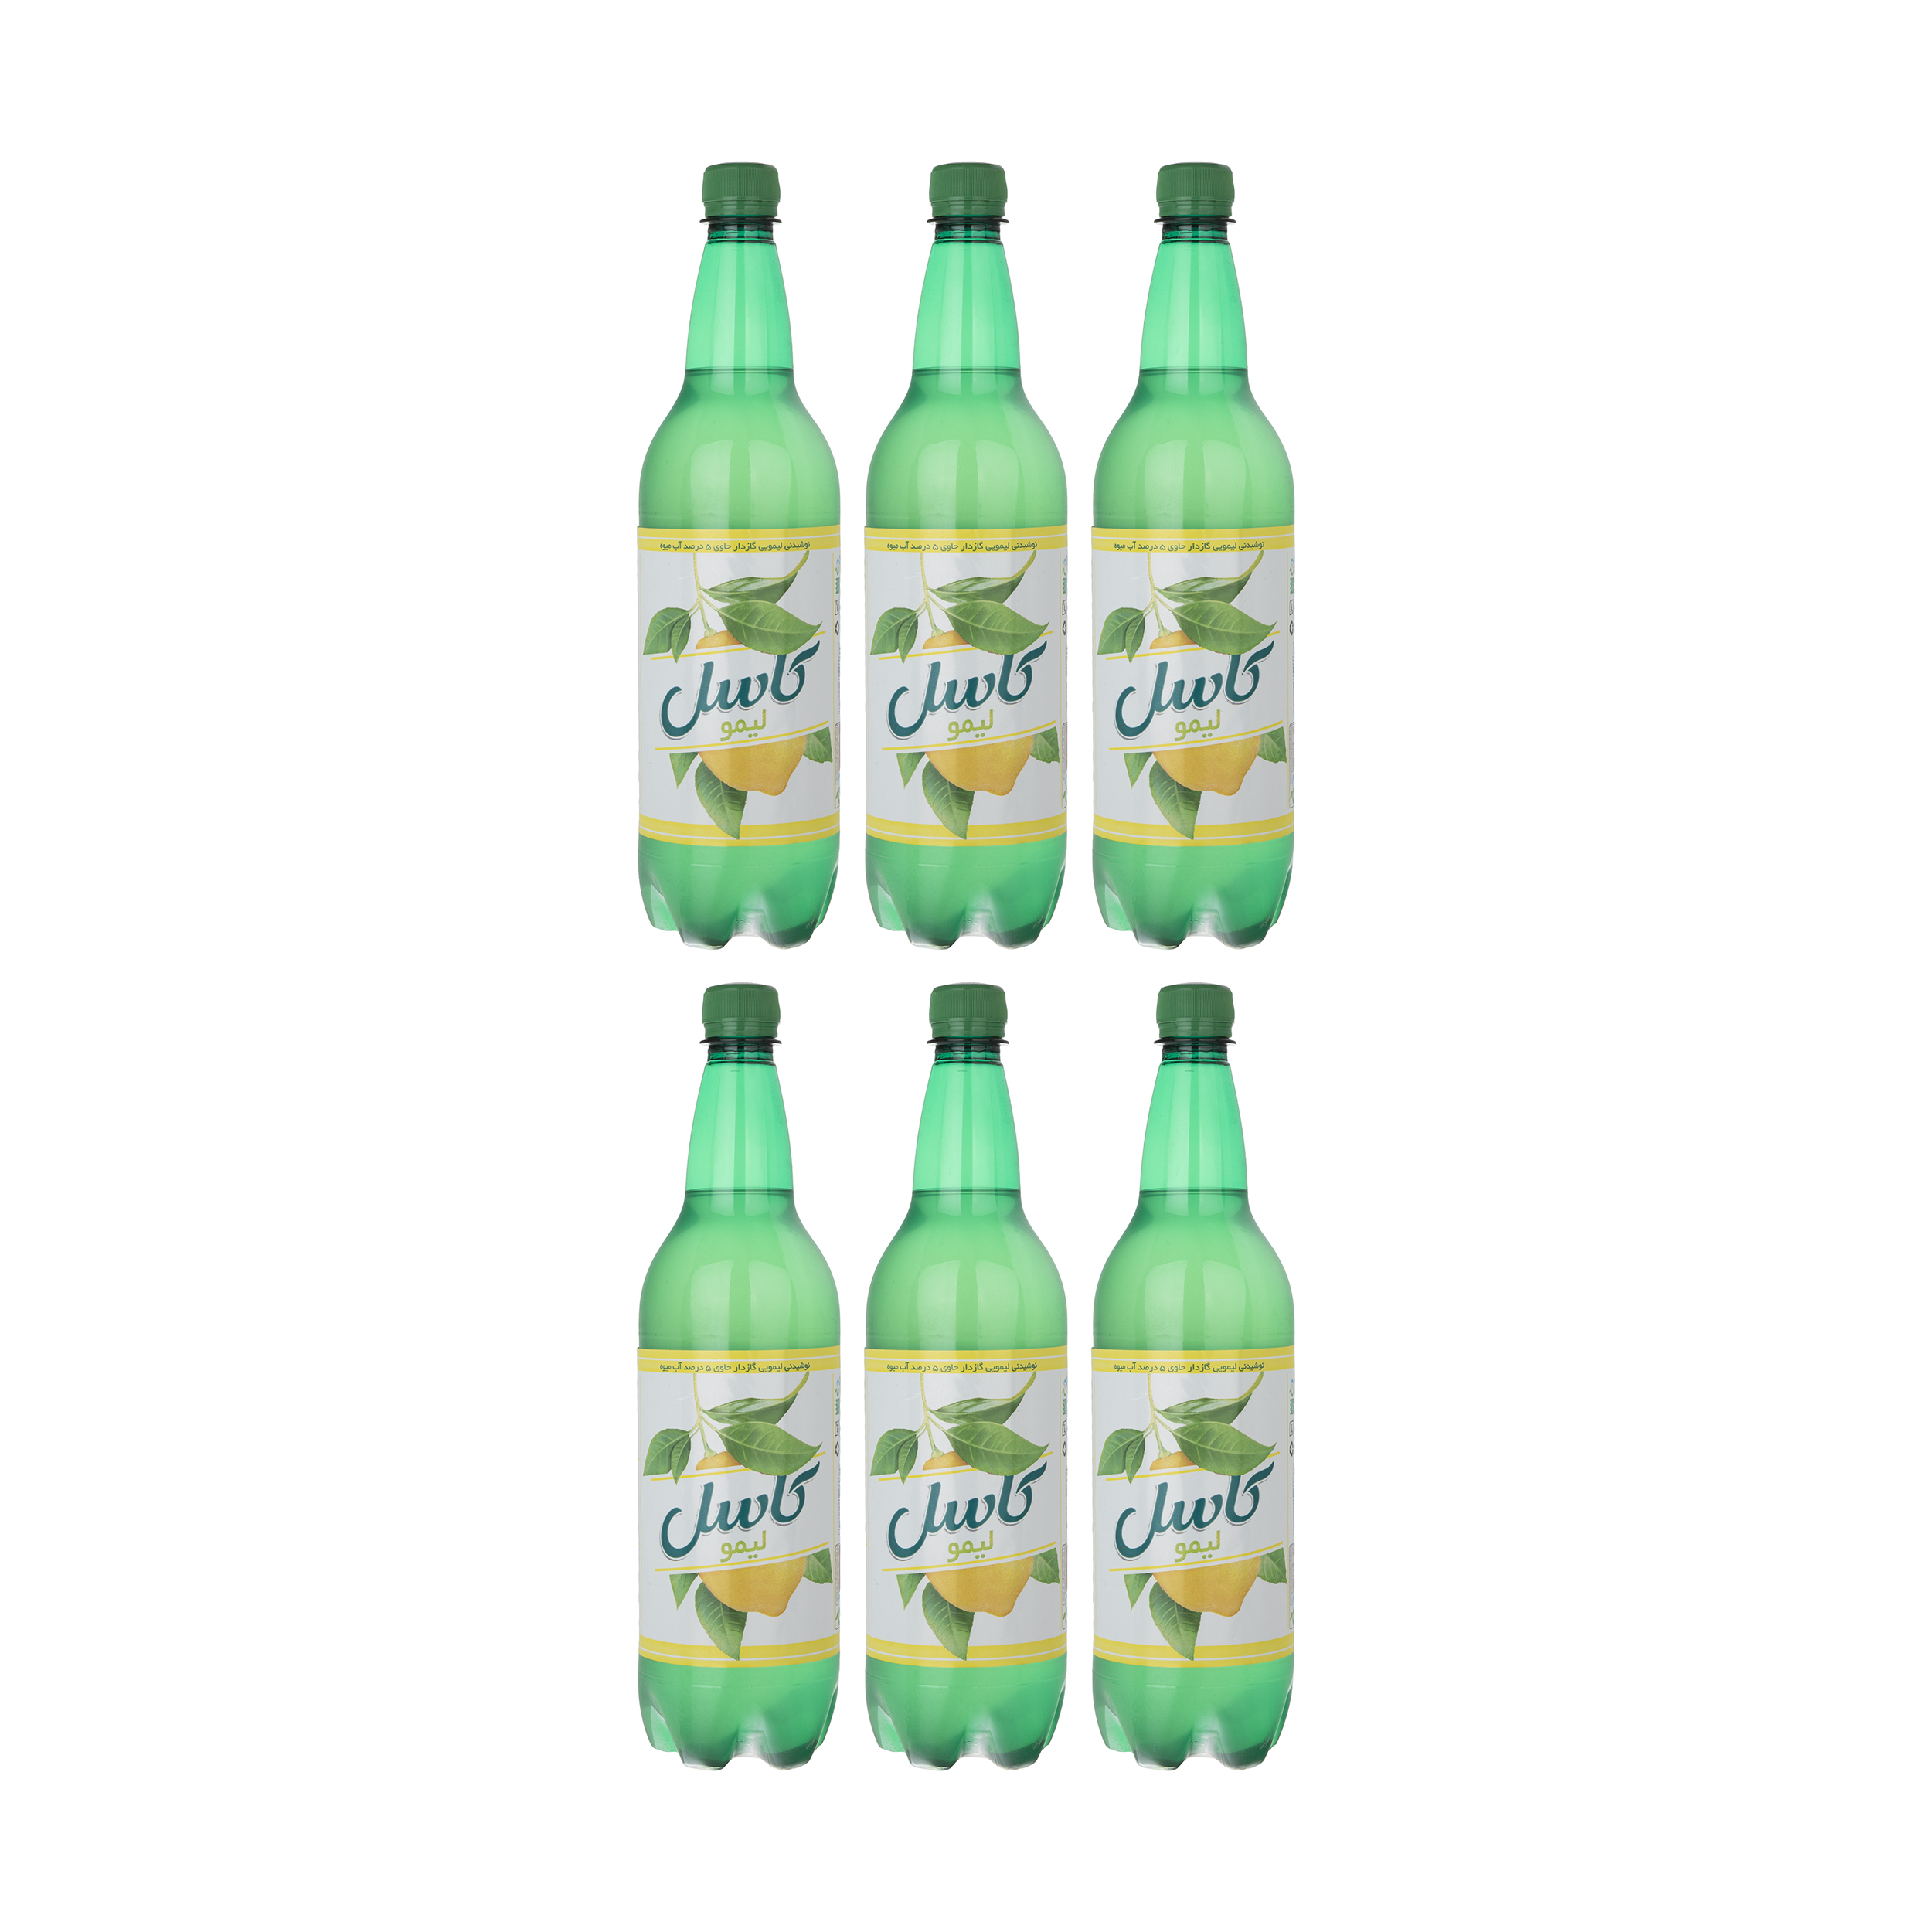 نوشیدنی کاسل با طعم لیمو - 1 لیتر بسته 6 عددی 